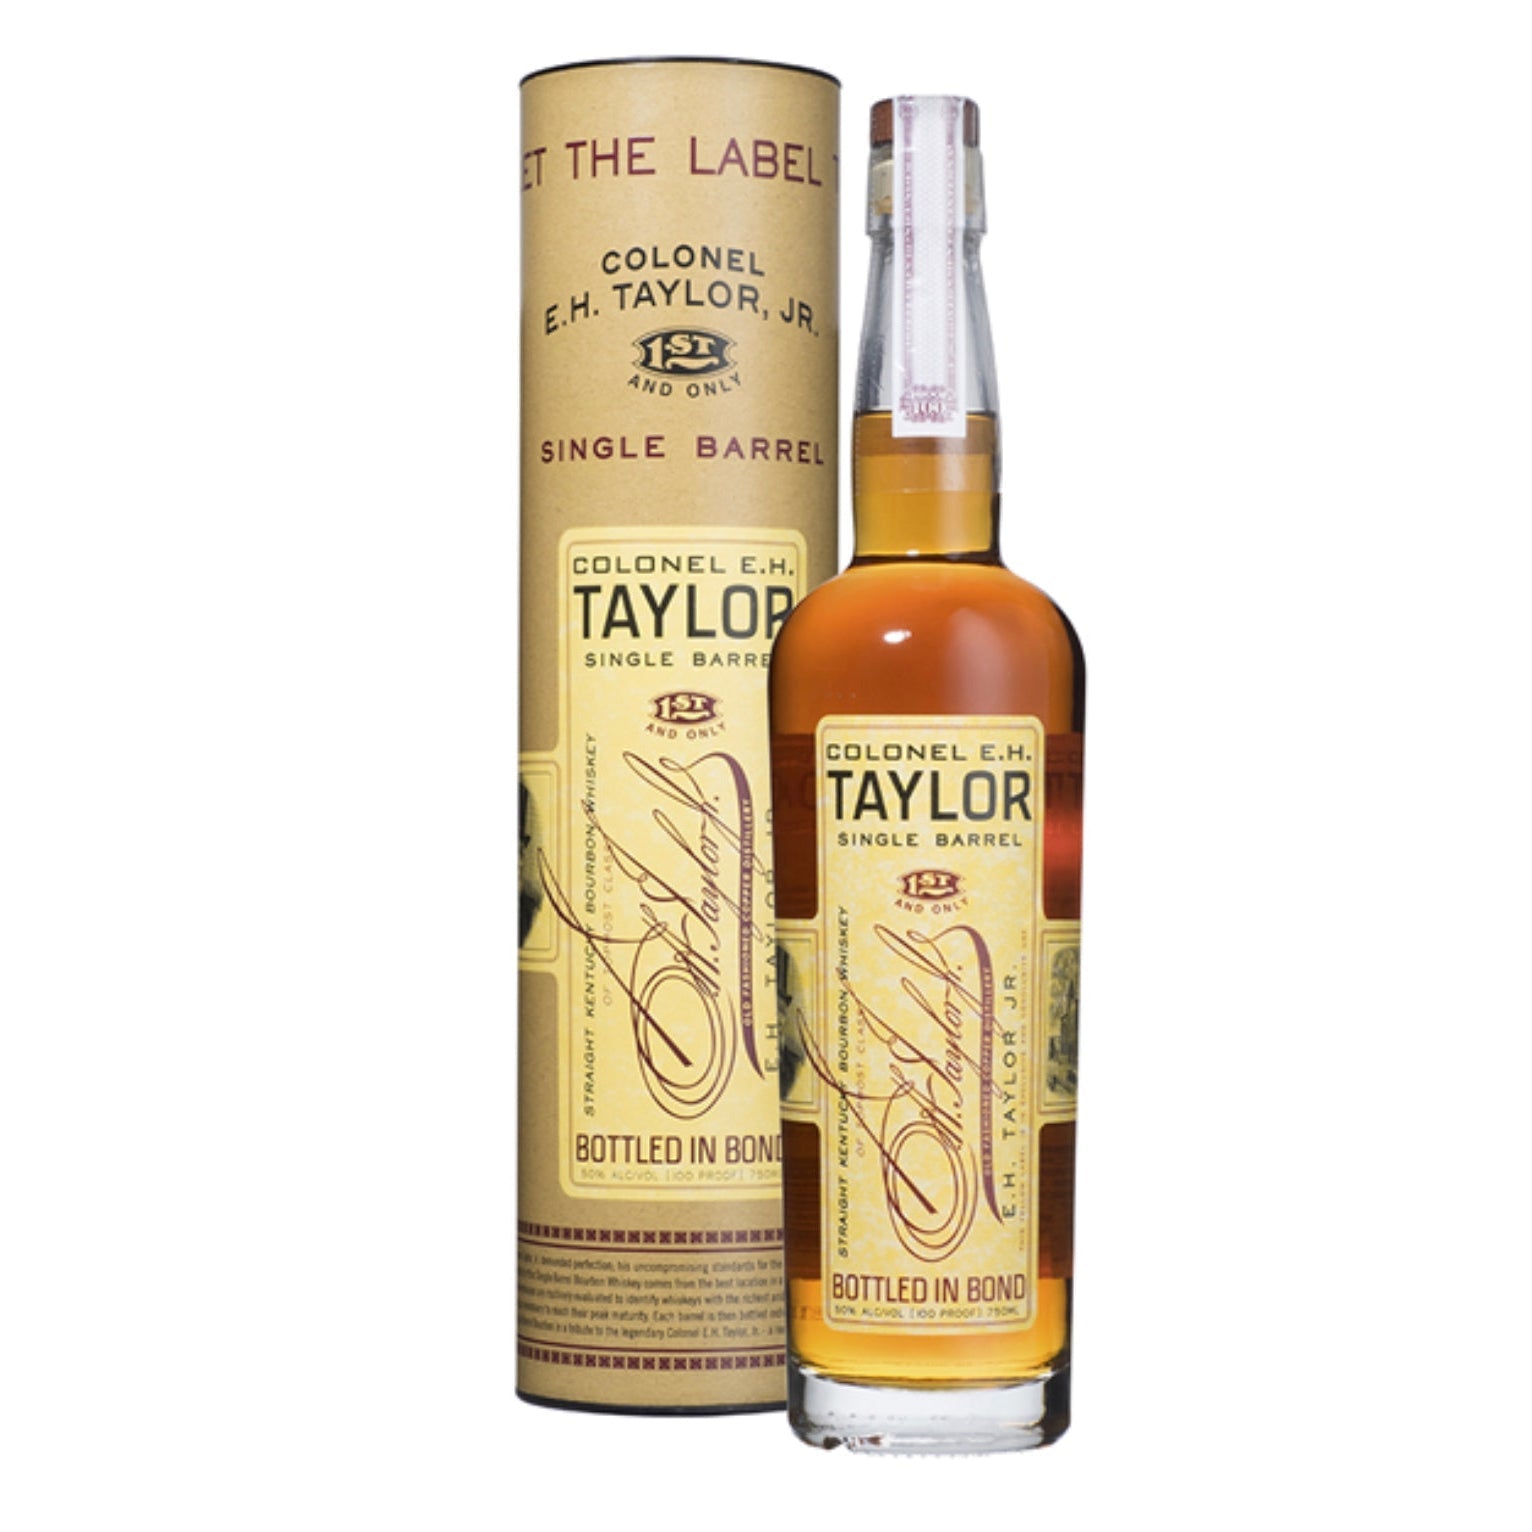 Colonel E.H. Taylor, Jr. Single Barrel Bourbon Whiskey 750ml